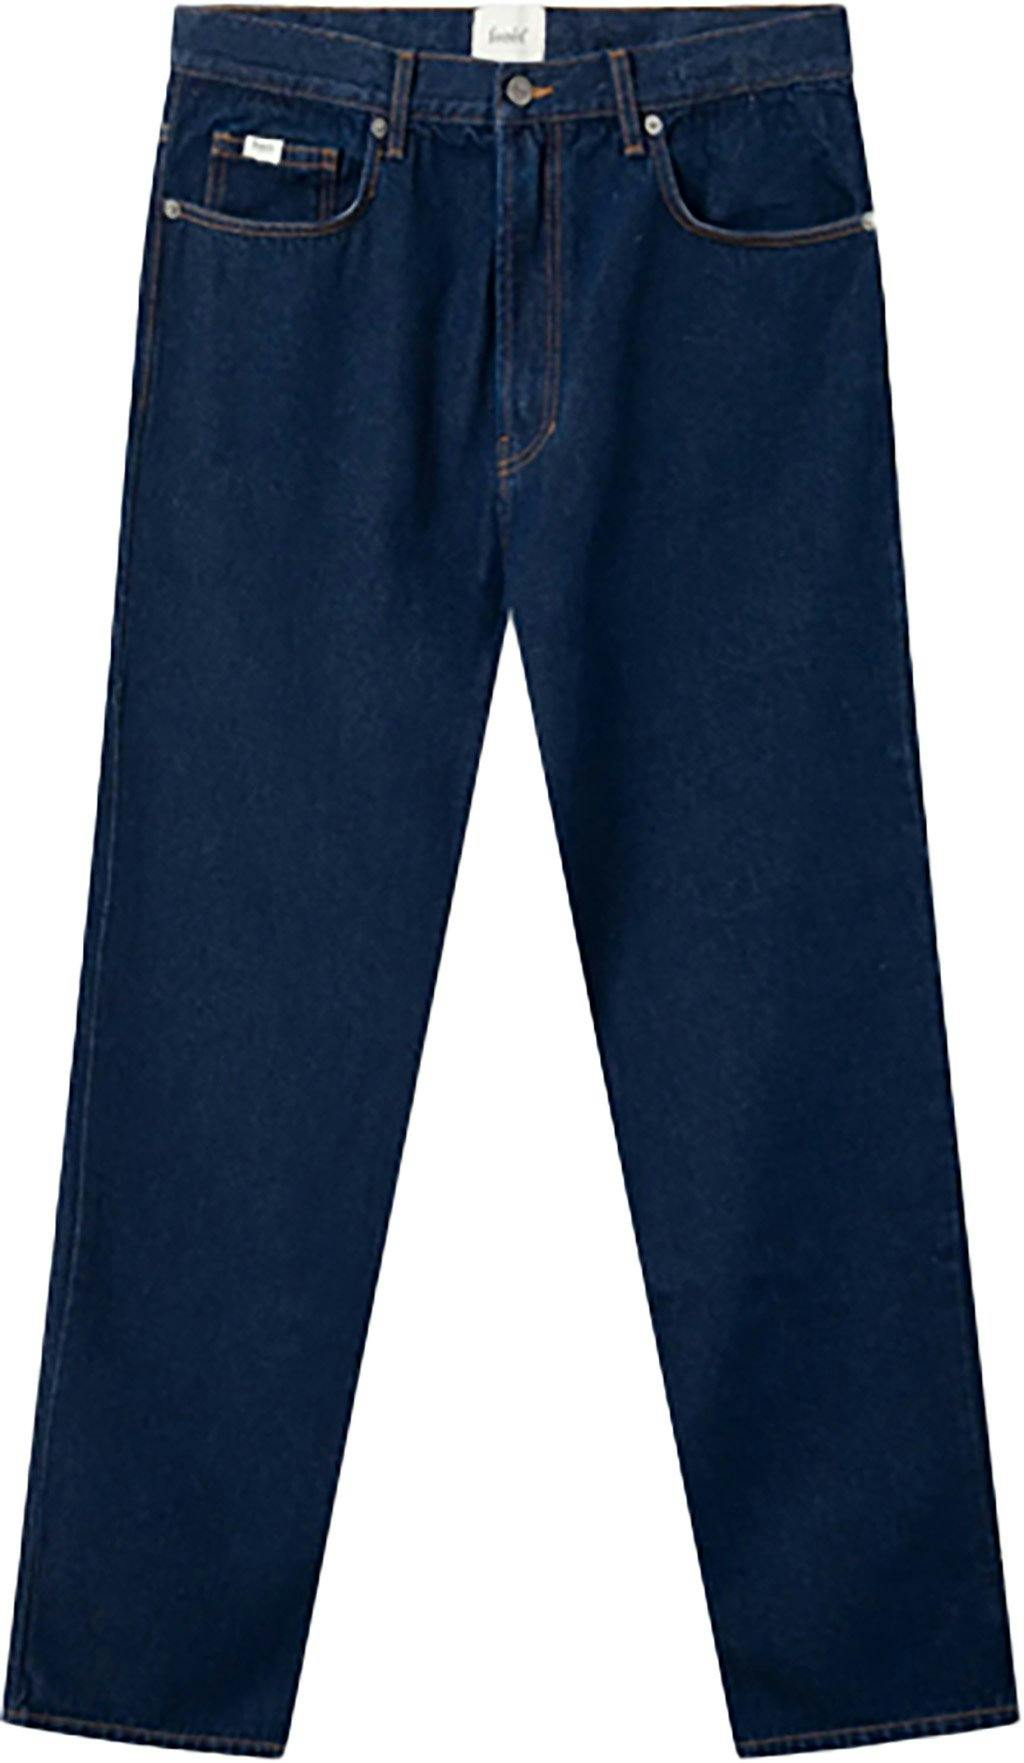 Product image for Heath Denim Jeans - Men's